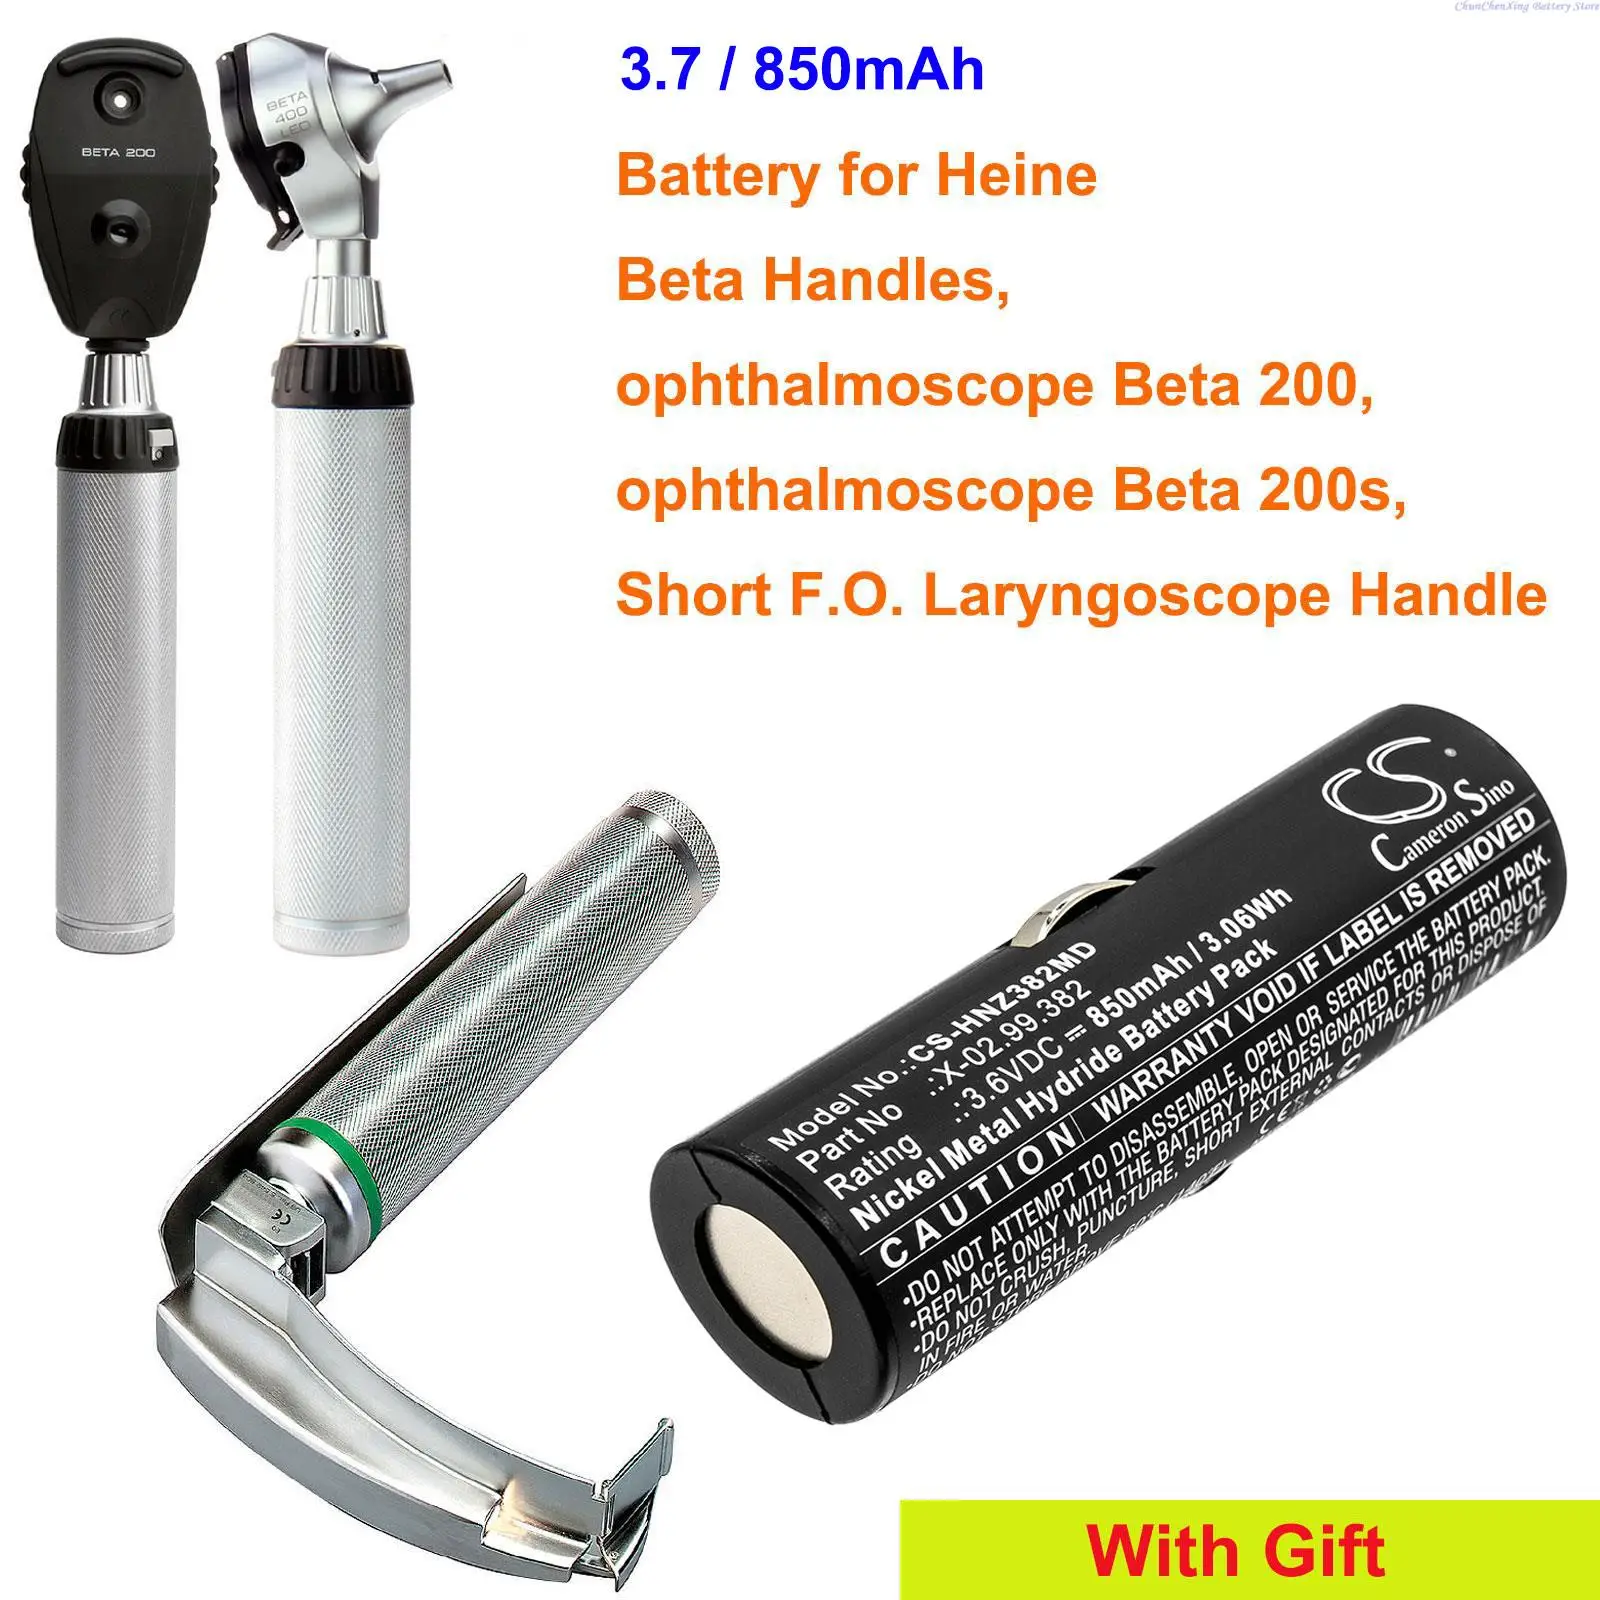 

Cameron Sino 850mAh Battery for Heine Beta Handles, ophthalmoscope Beta 200, Beta 200s, Short F.O. Laryngoscope Handle